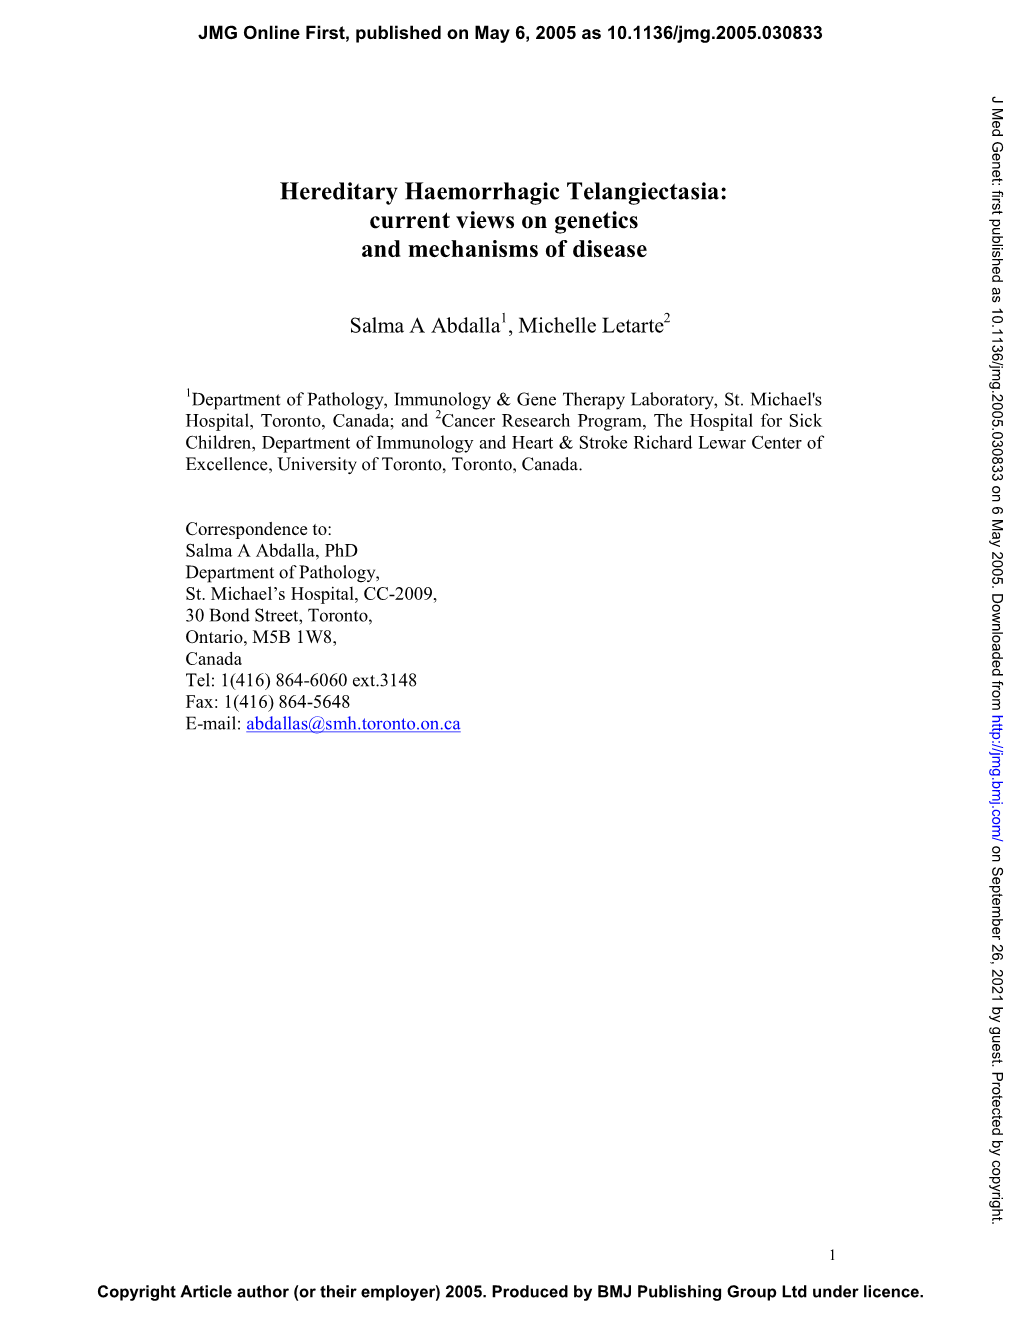 Hereditary Haemorrhagic Telangiectasia: Current Views on Genetics and Mechanisms of Disease